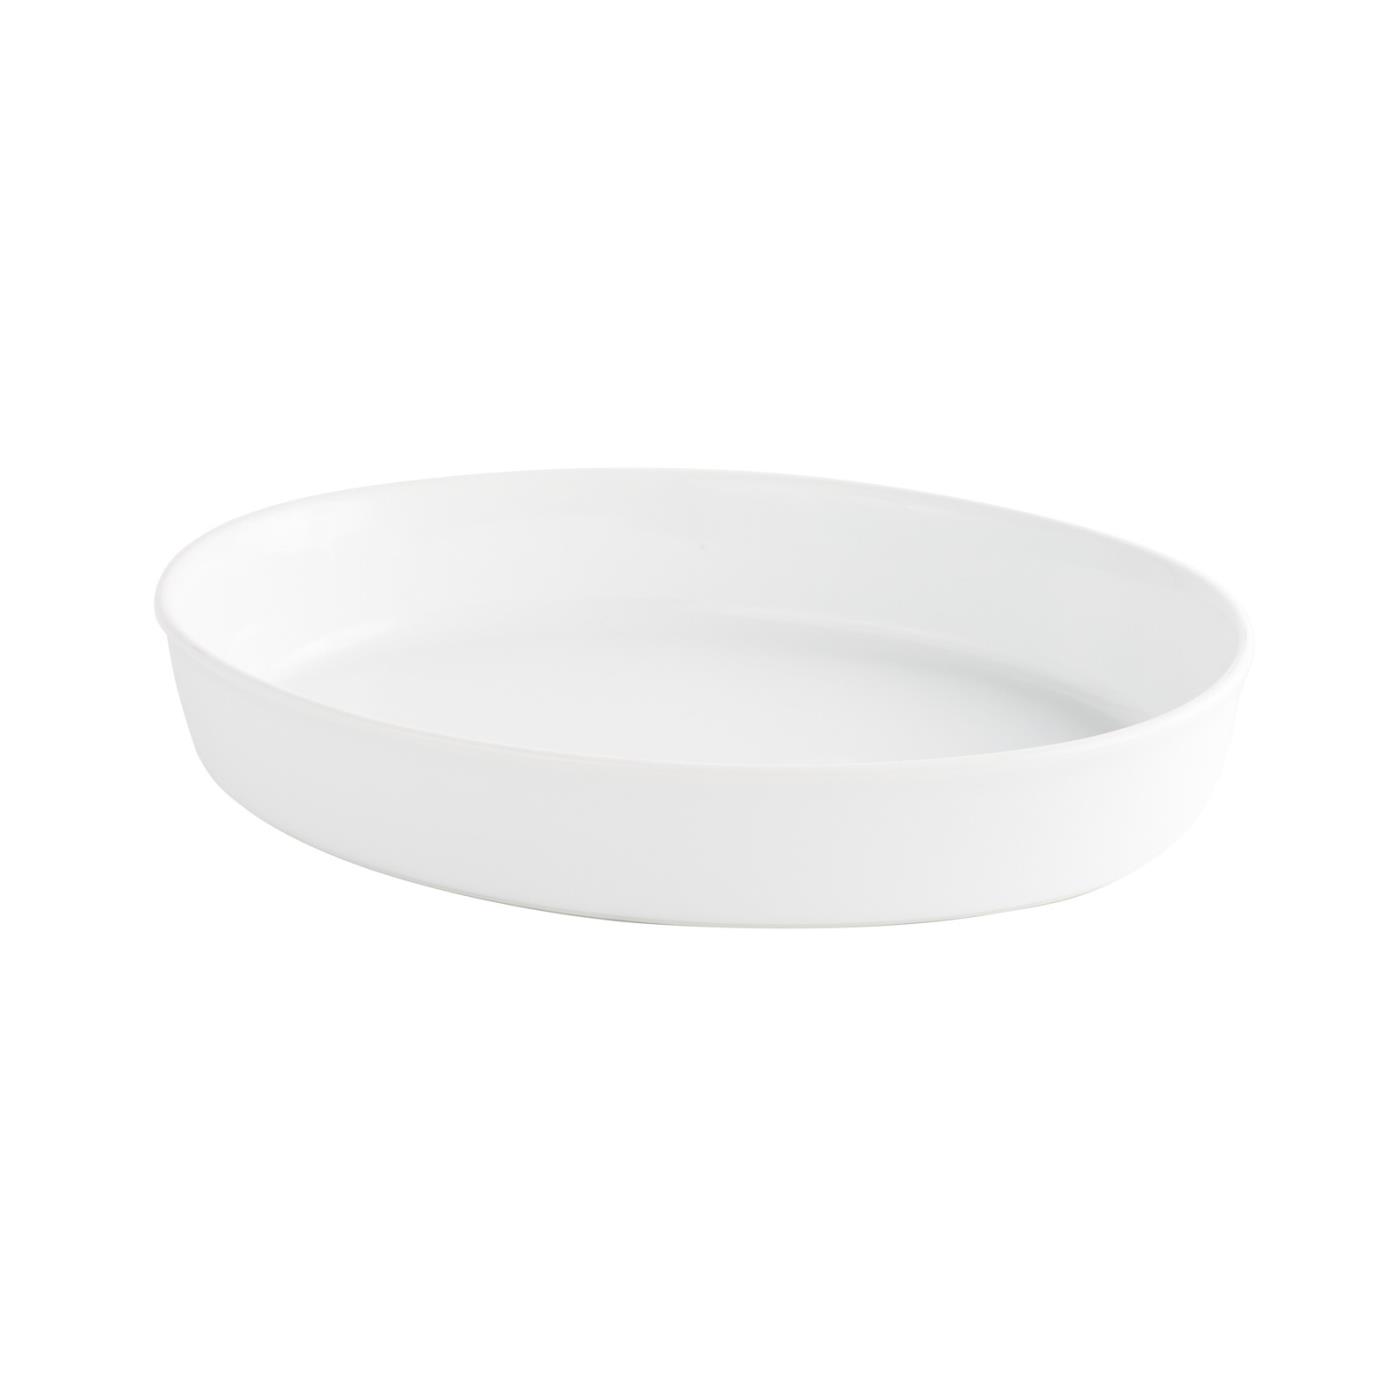 White Ceramic Oval Casserole Dish - 8.75" x 12.5"